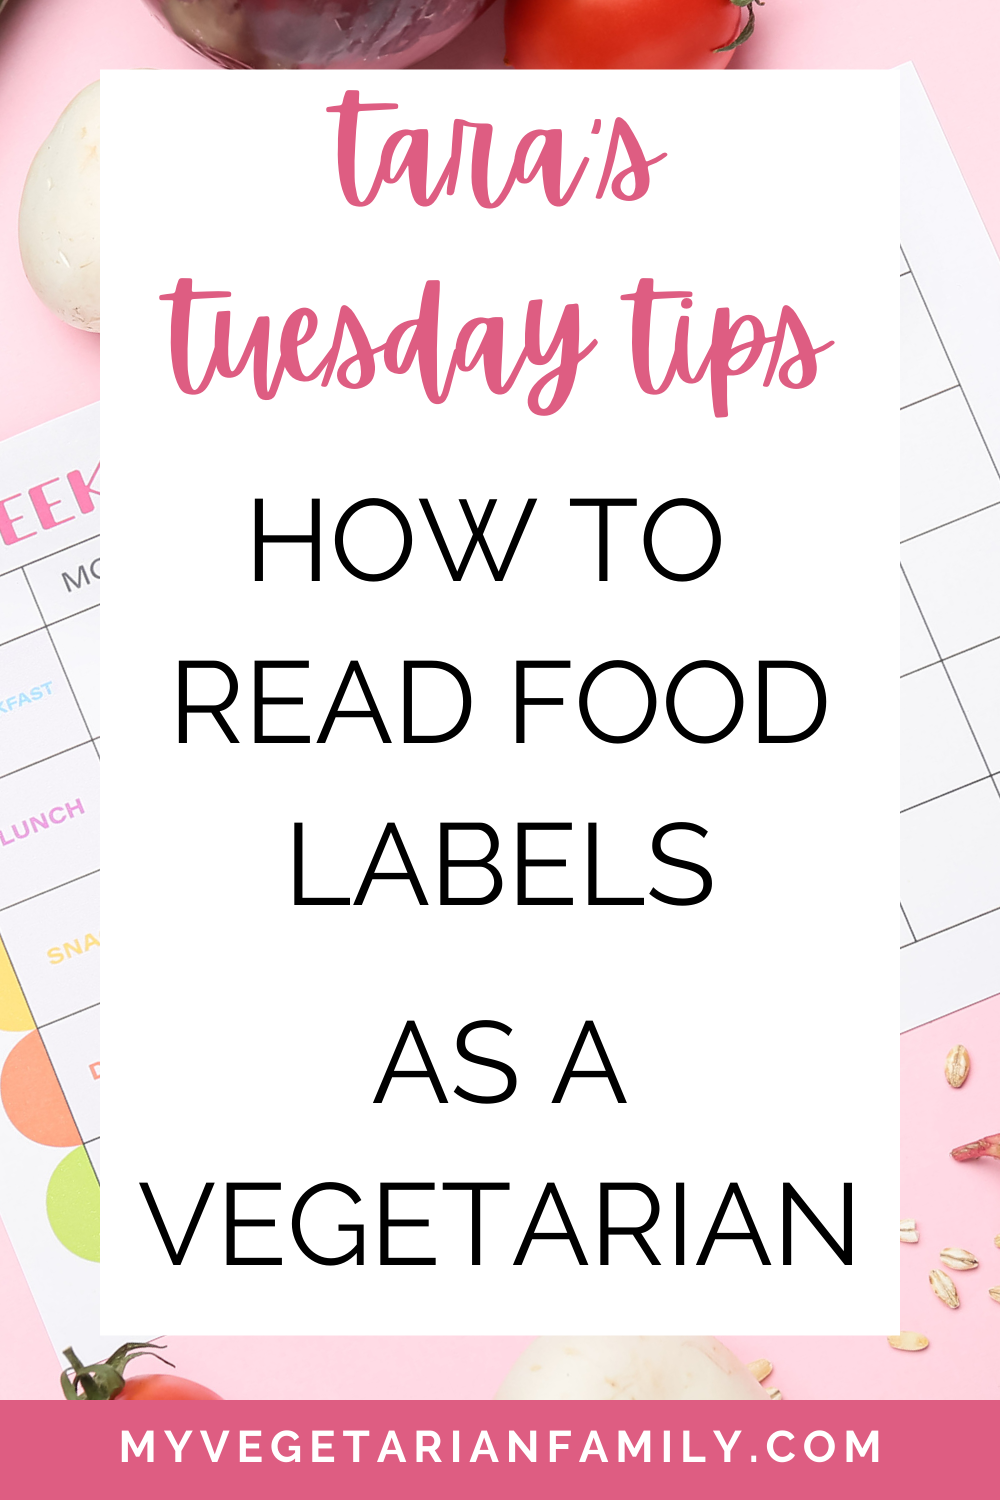 How To Read Food Labels As A Vegetarian | Tara's Tuesday Tips | My Vegetarian Family #tarastuesdaytips #nutritiontips #readveganfoodlabels